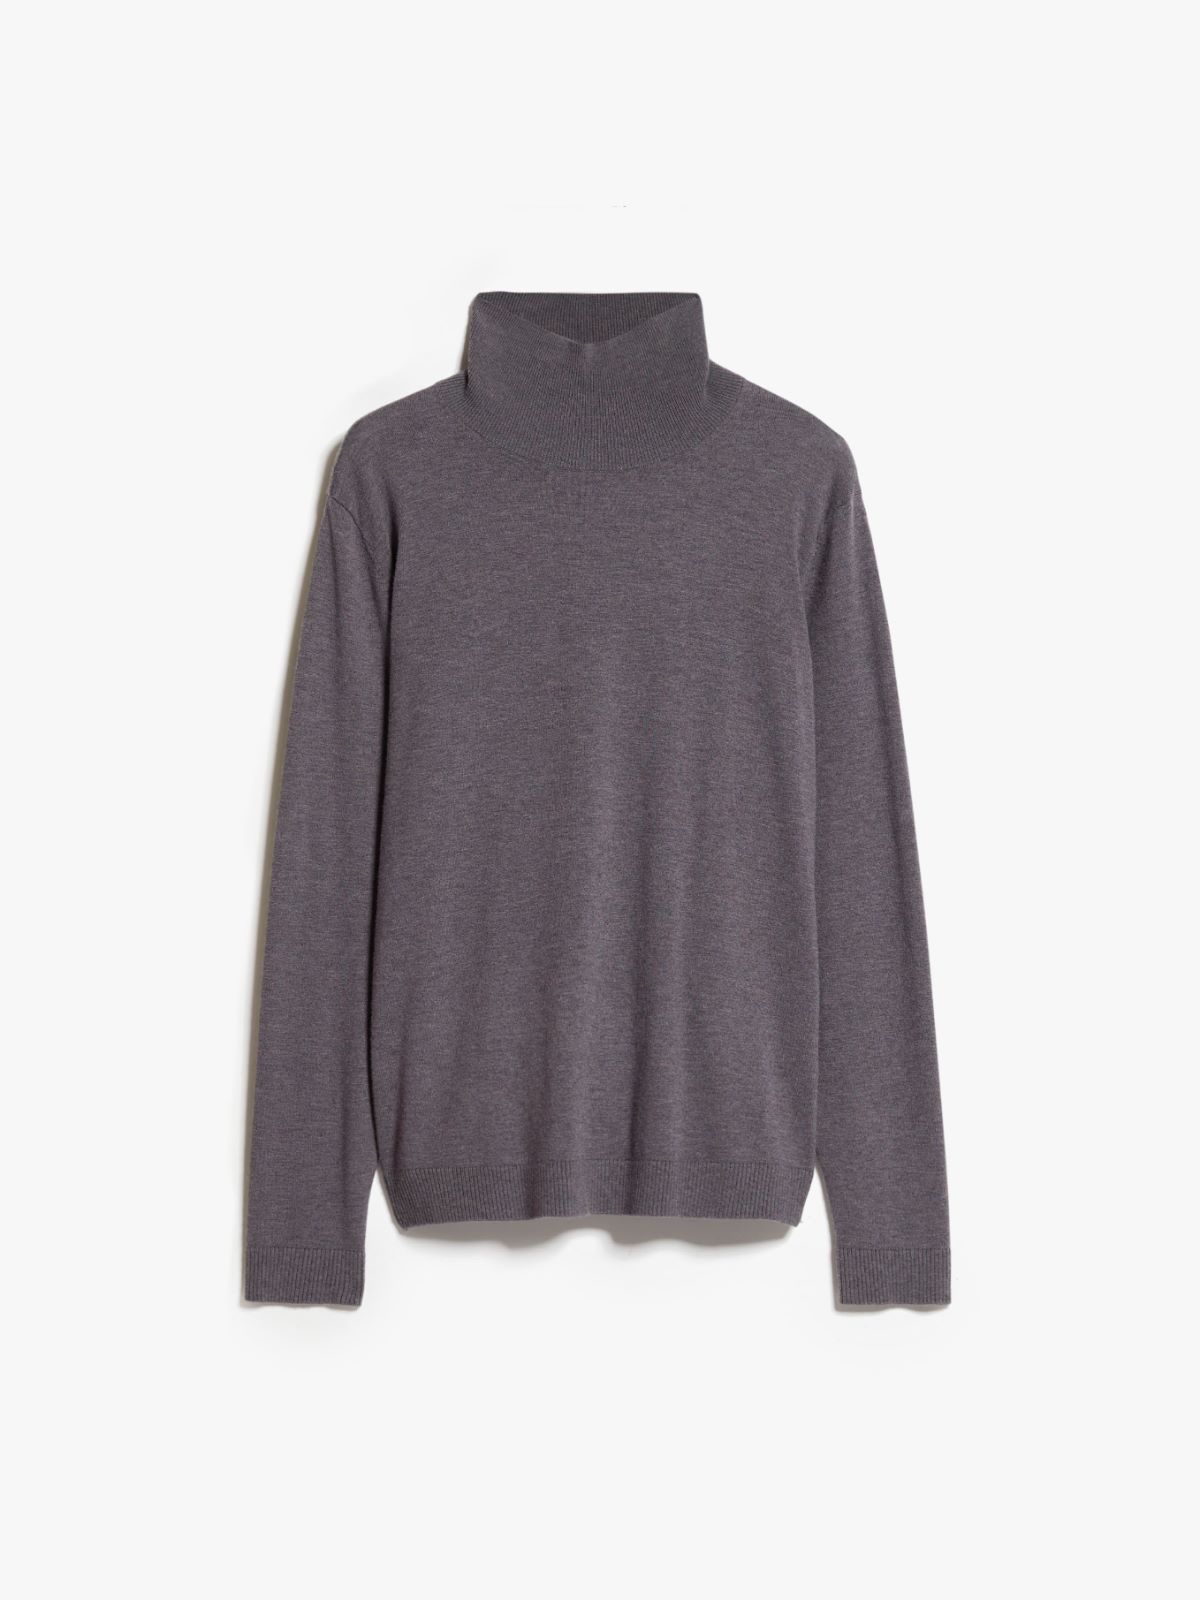 Silk and wool yarn sweater, dark grey | Weekend Max Mara